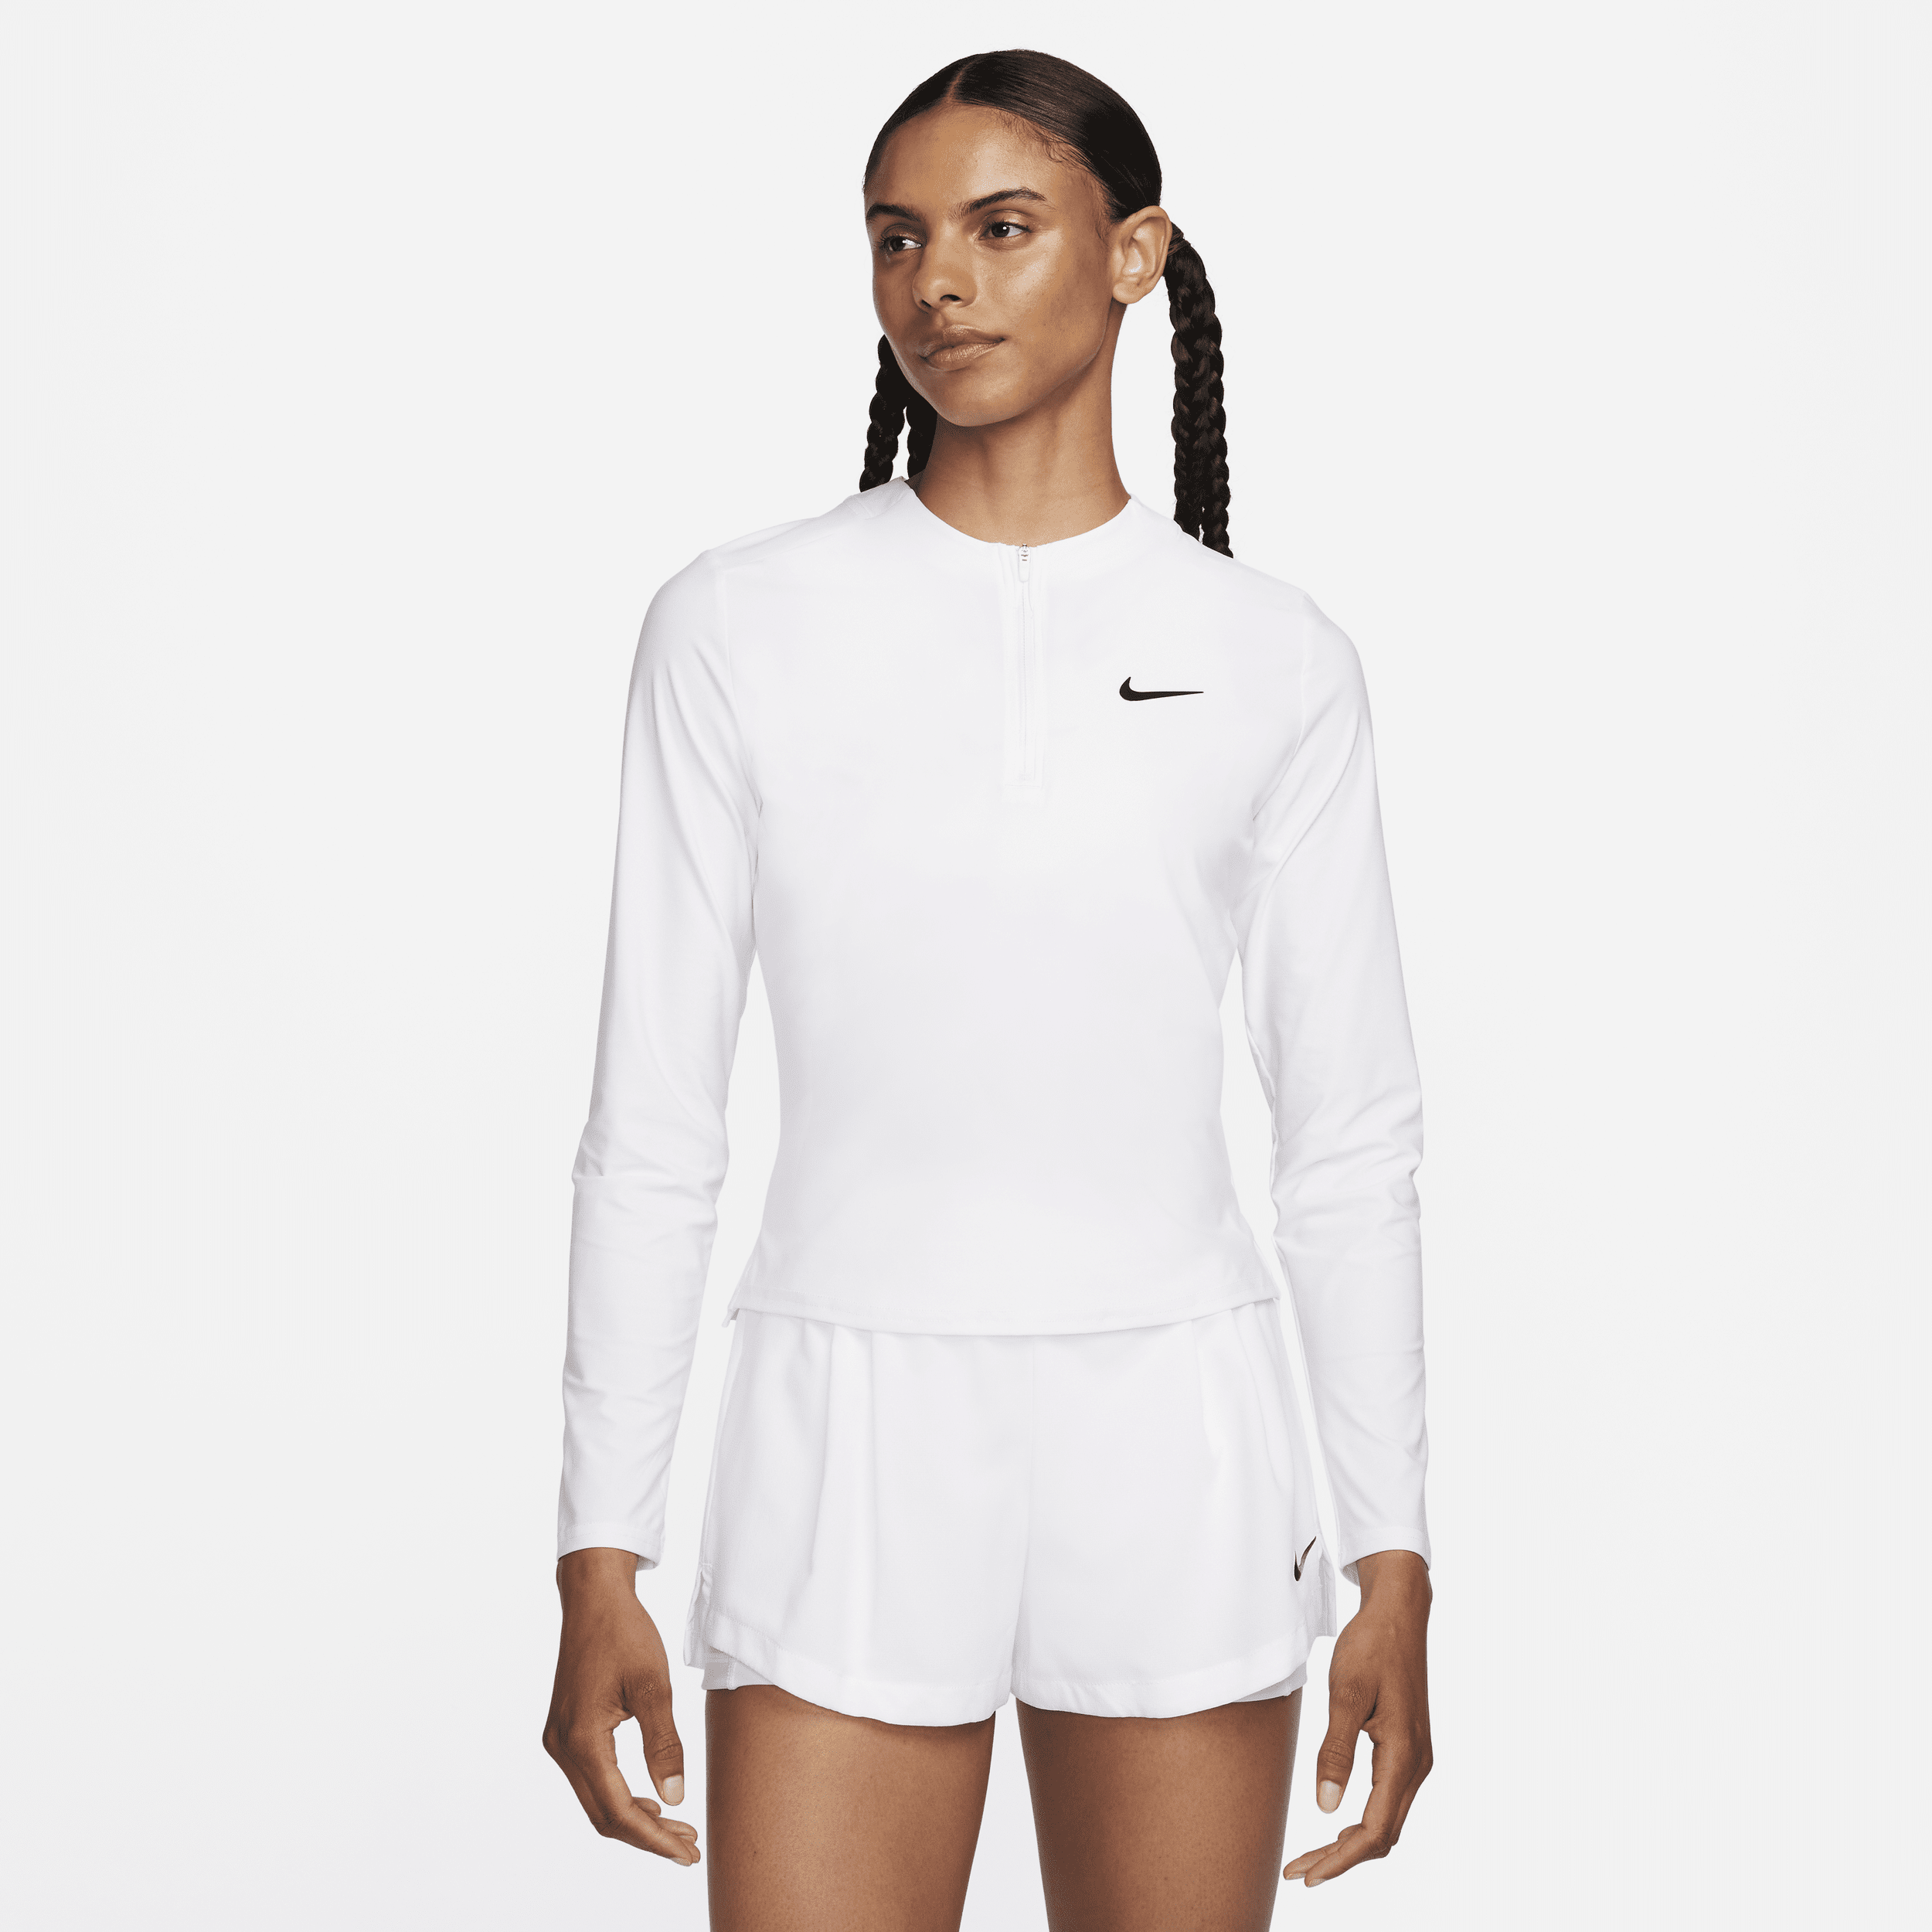 Nike Court Advantage Dri-FIT tennistussenlaag met korte rits voor dames Wit